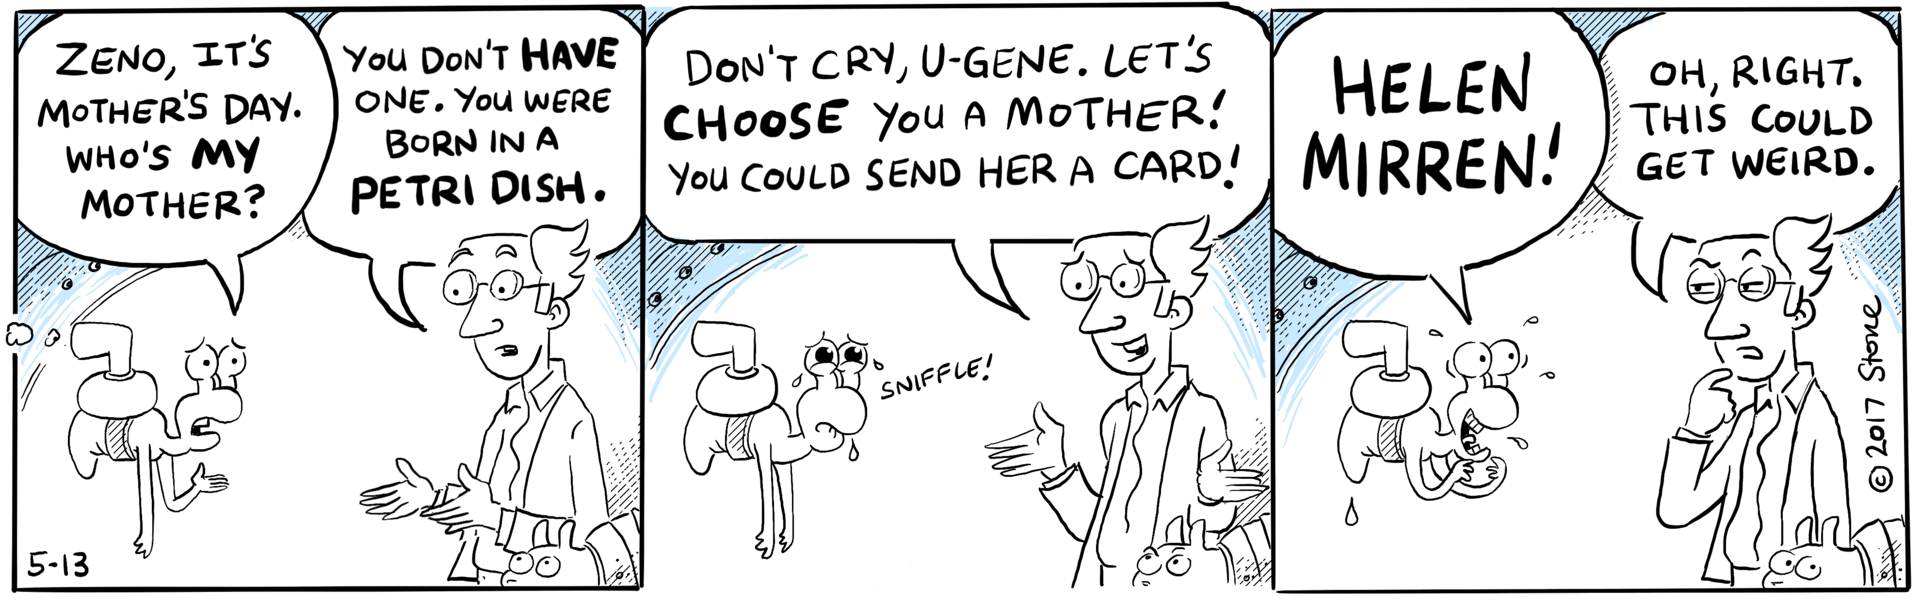 U-Gene wishes his mother was Helen Mirren.